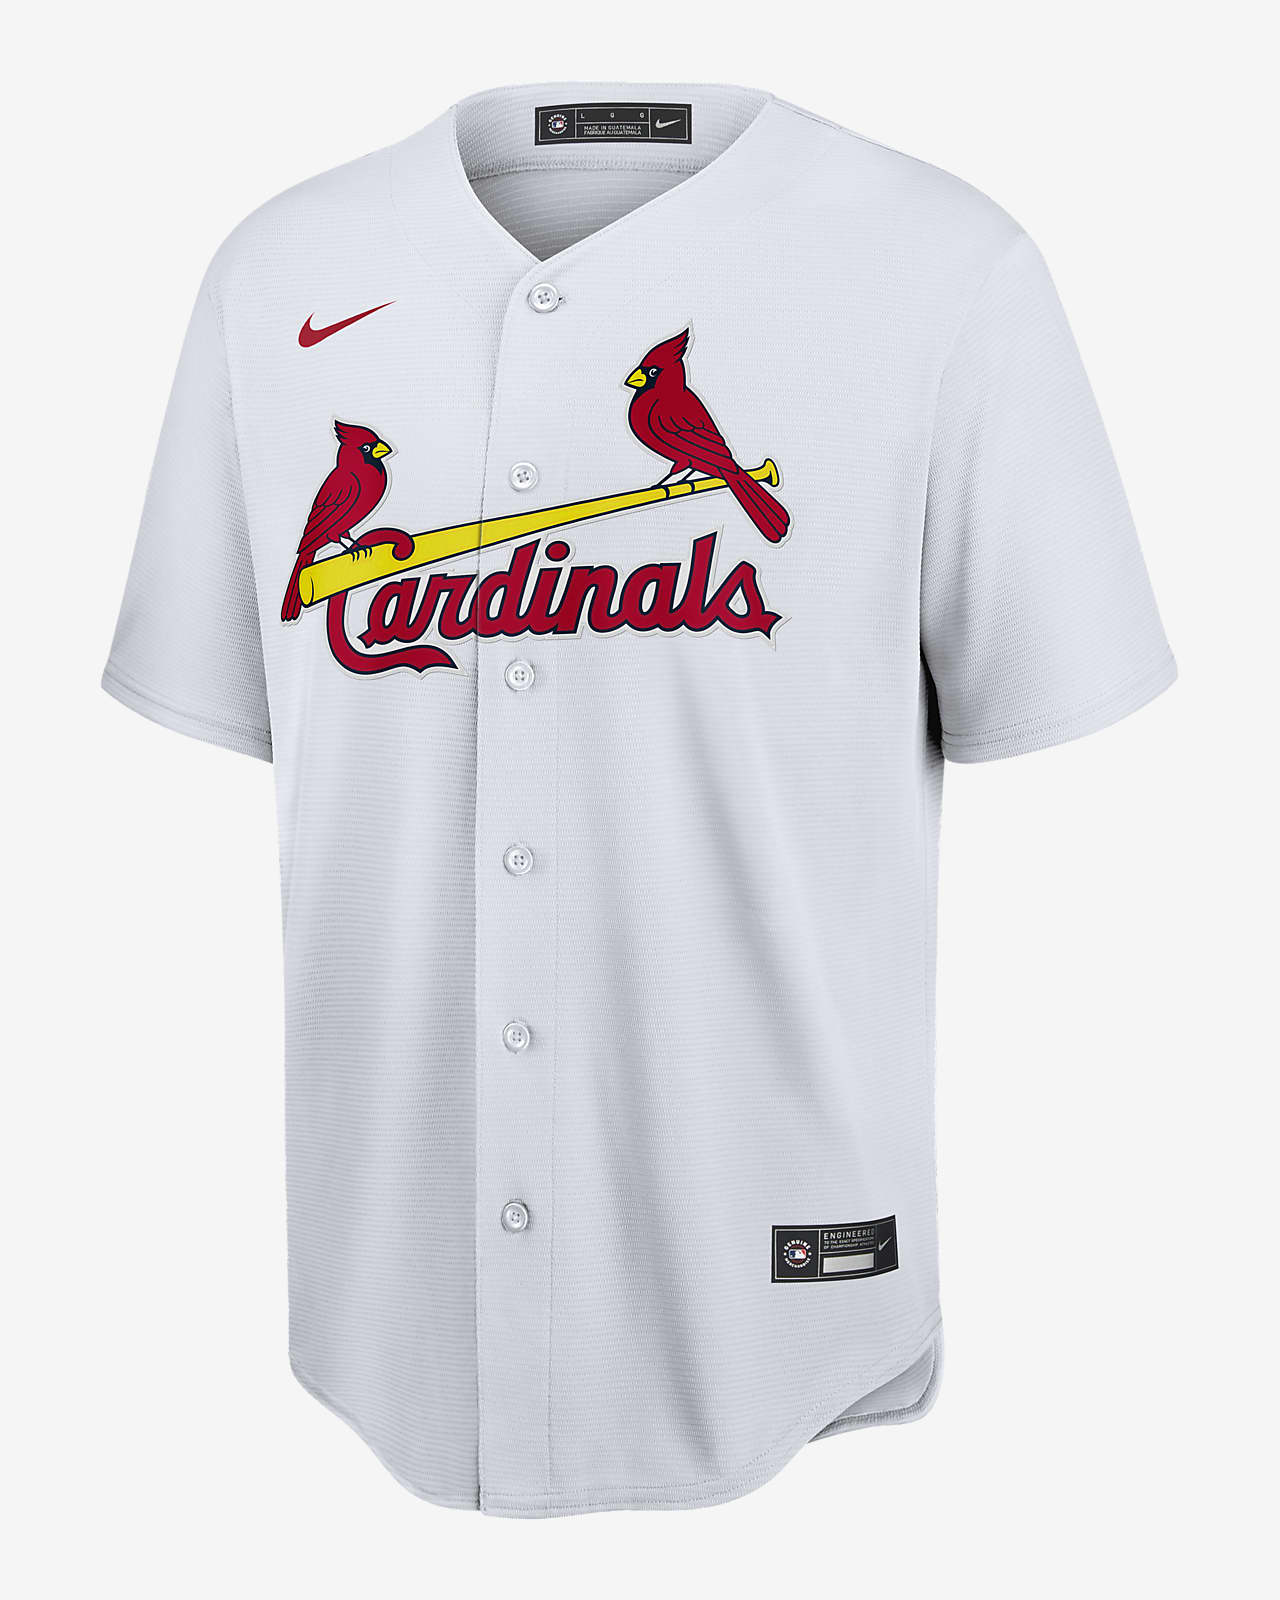 st louis cardinals official jersey